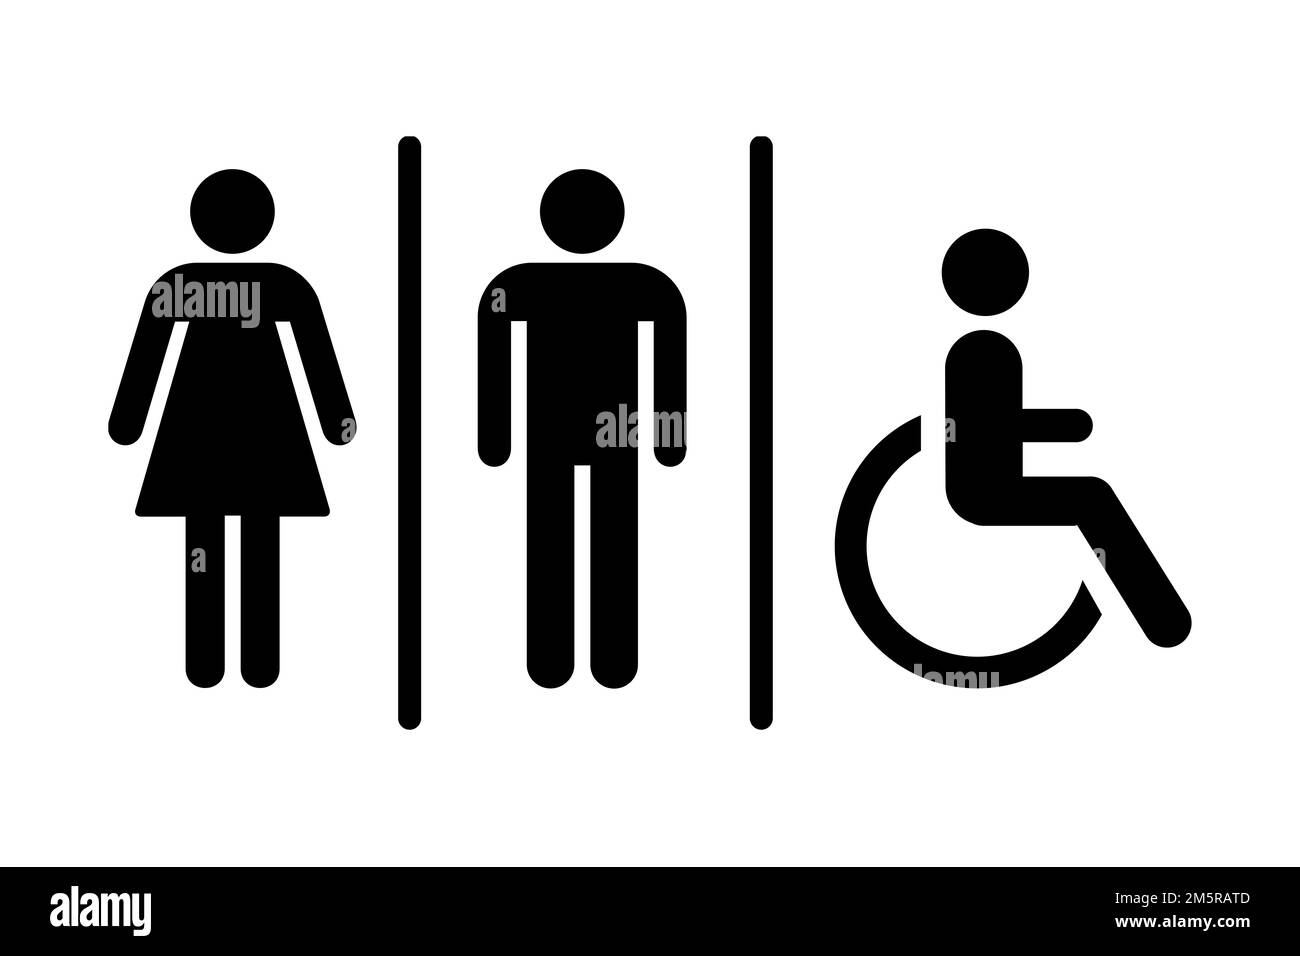 Toilet and restroom symbol icon Stock Photo